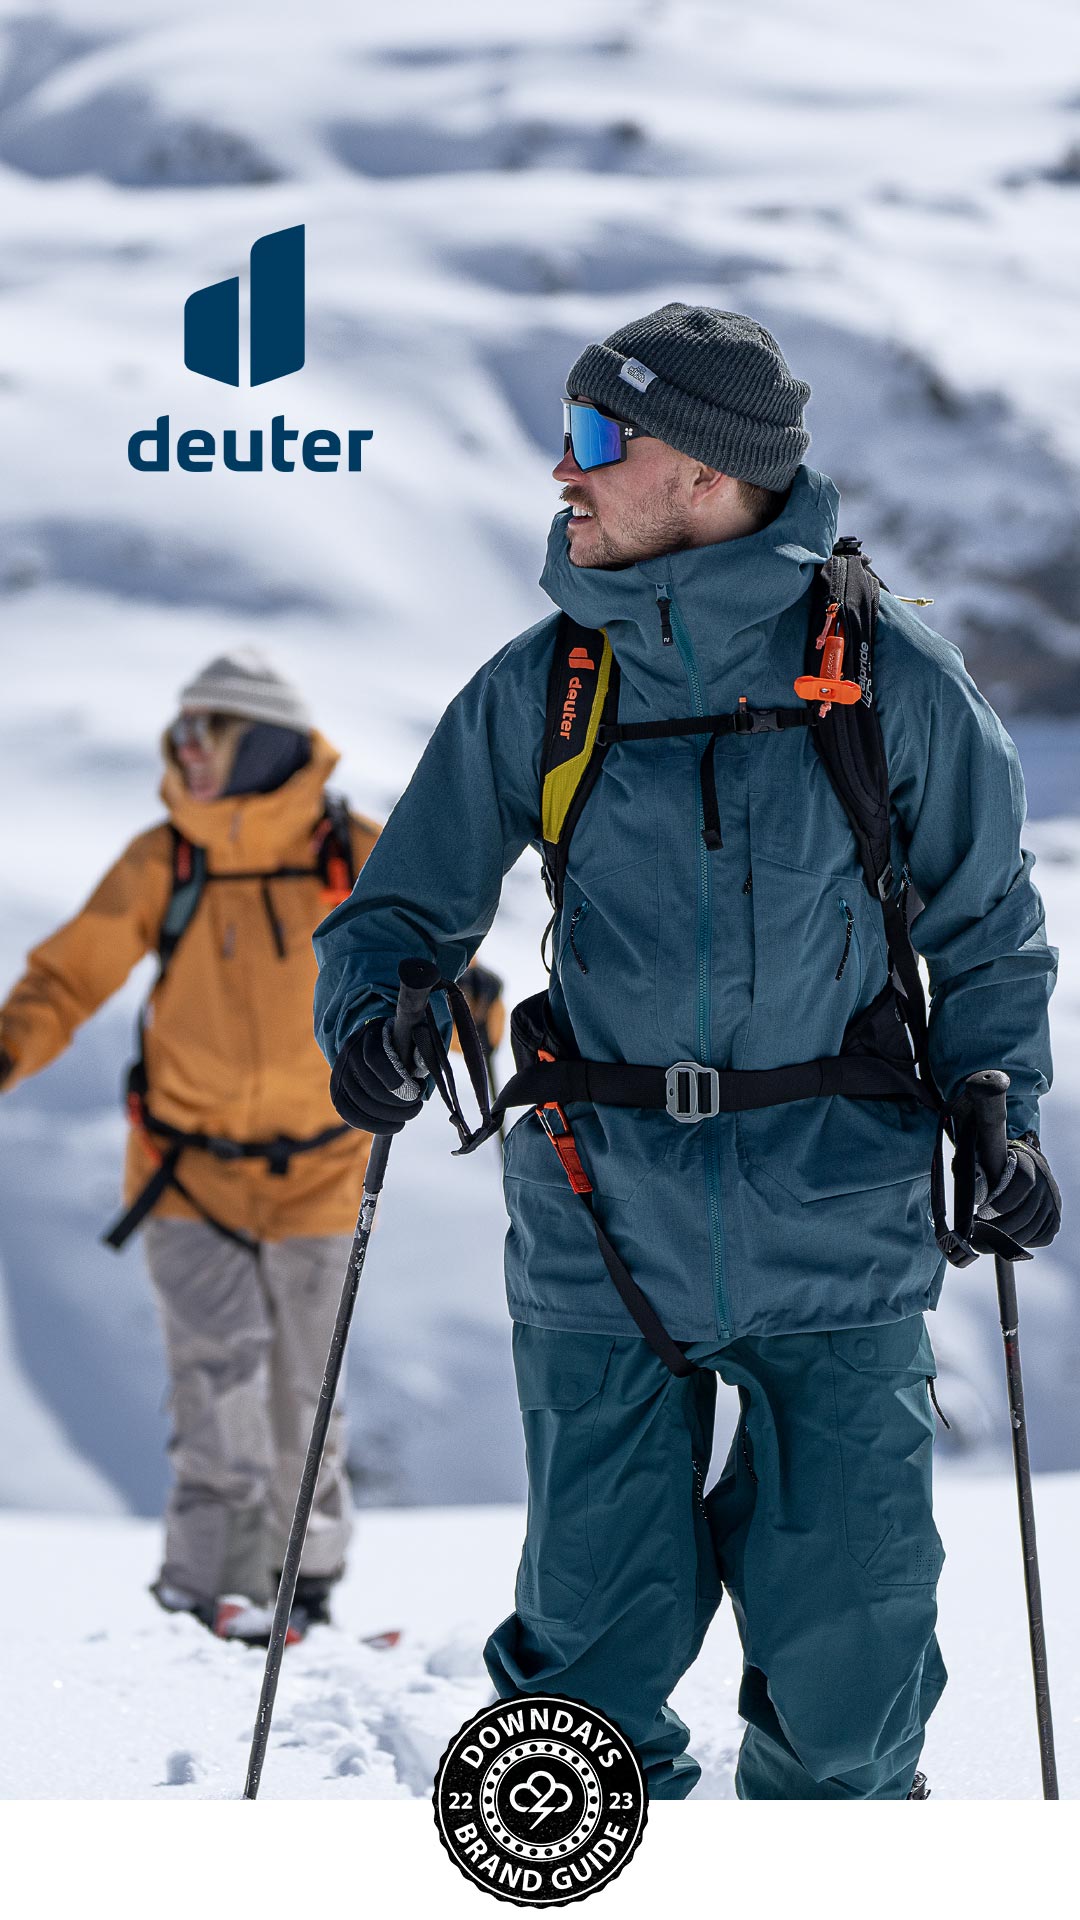 Deuter-Mobile-Header